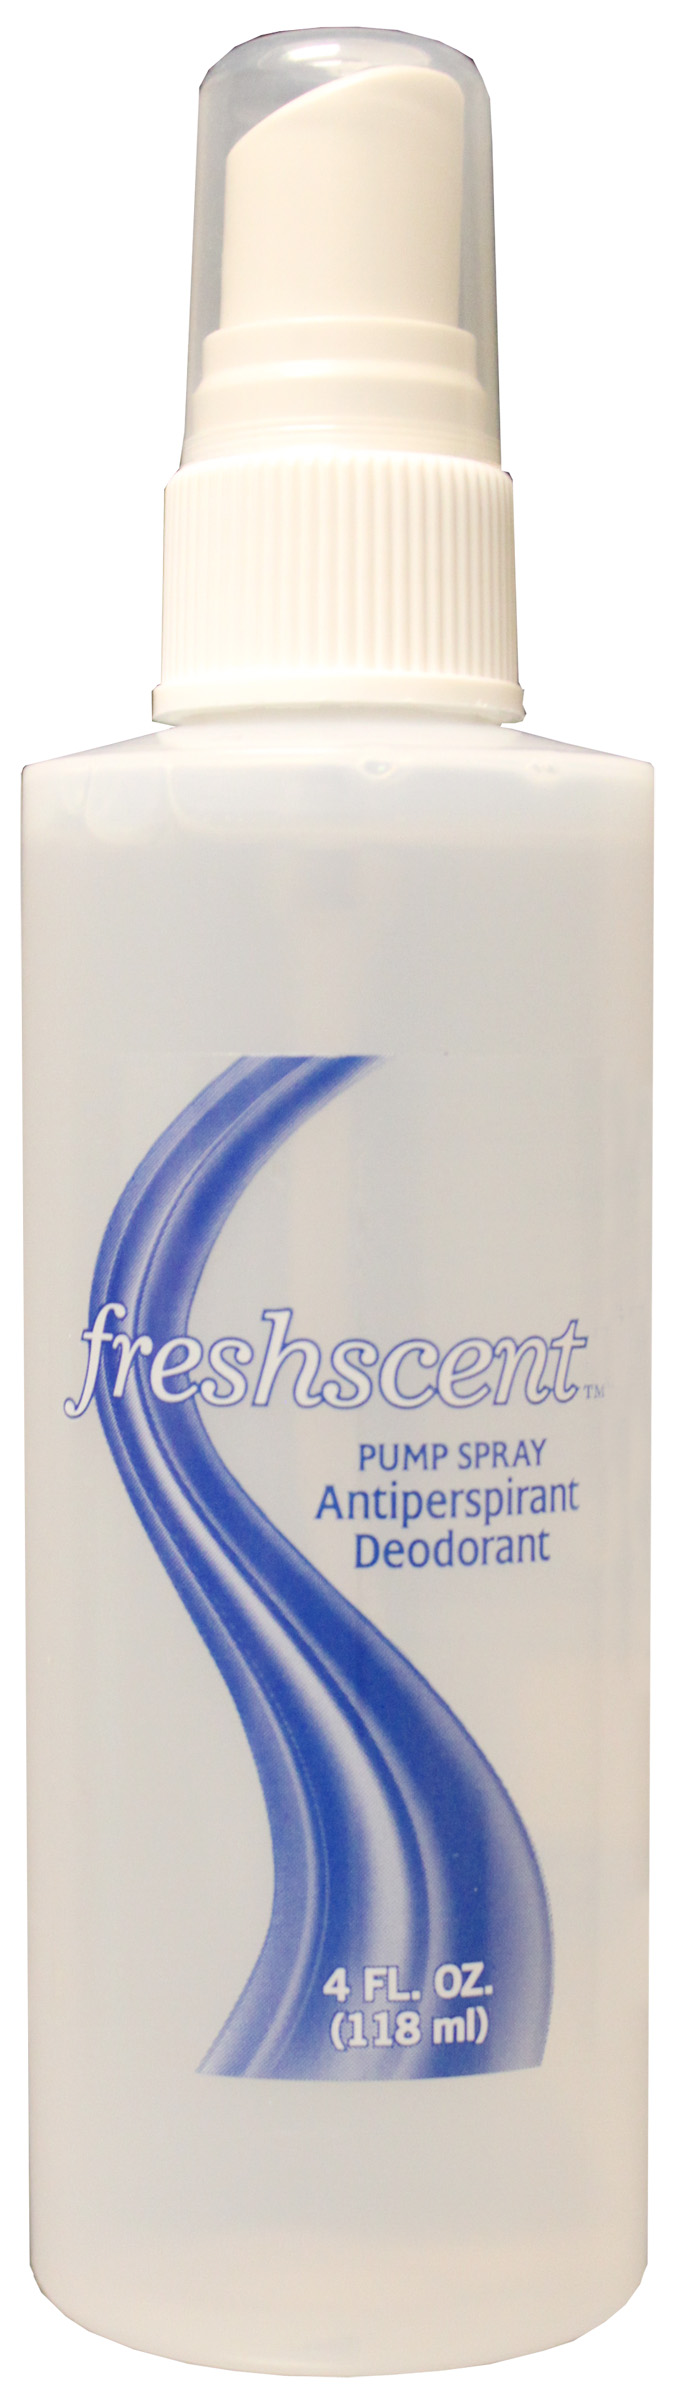 Freshscent 4 oz. Pump Spray Anti-Perspirant / Deodorant